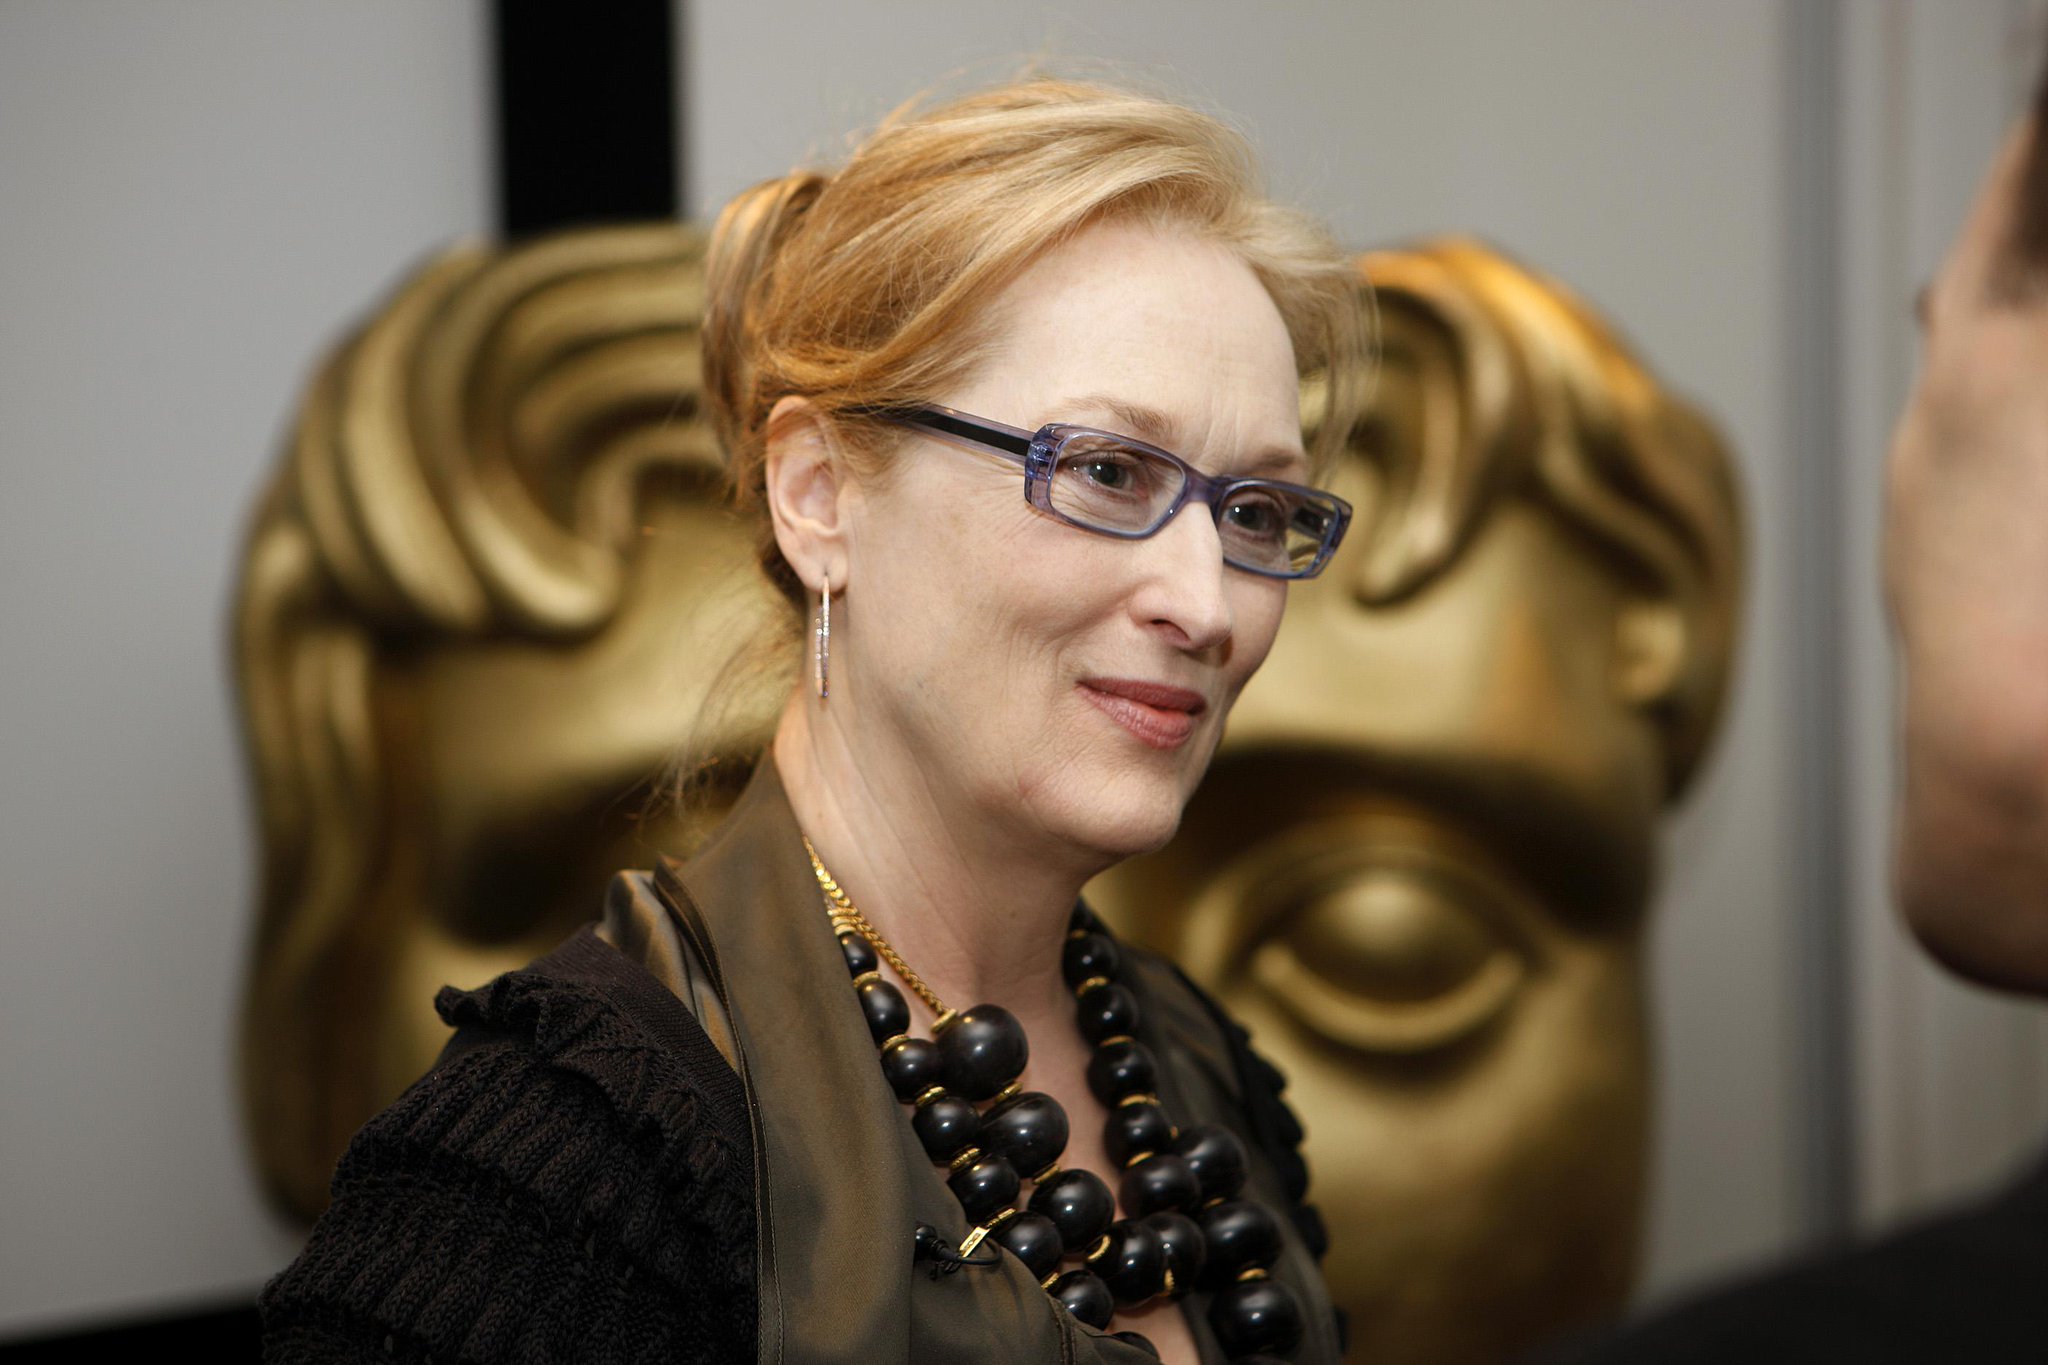 We\d like to wish Queen Meryl Streep a very happy birthday! 